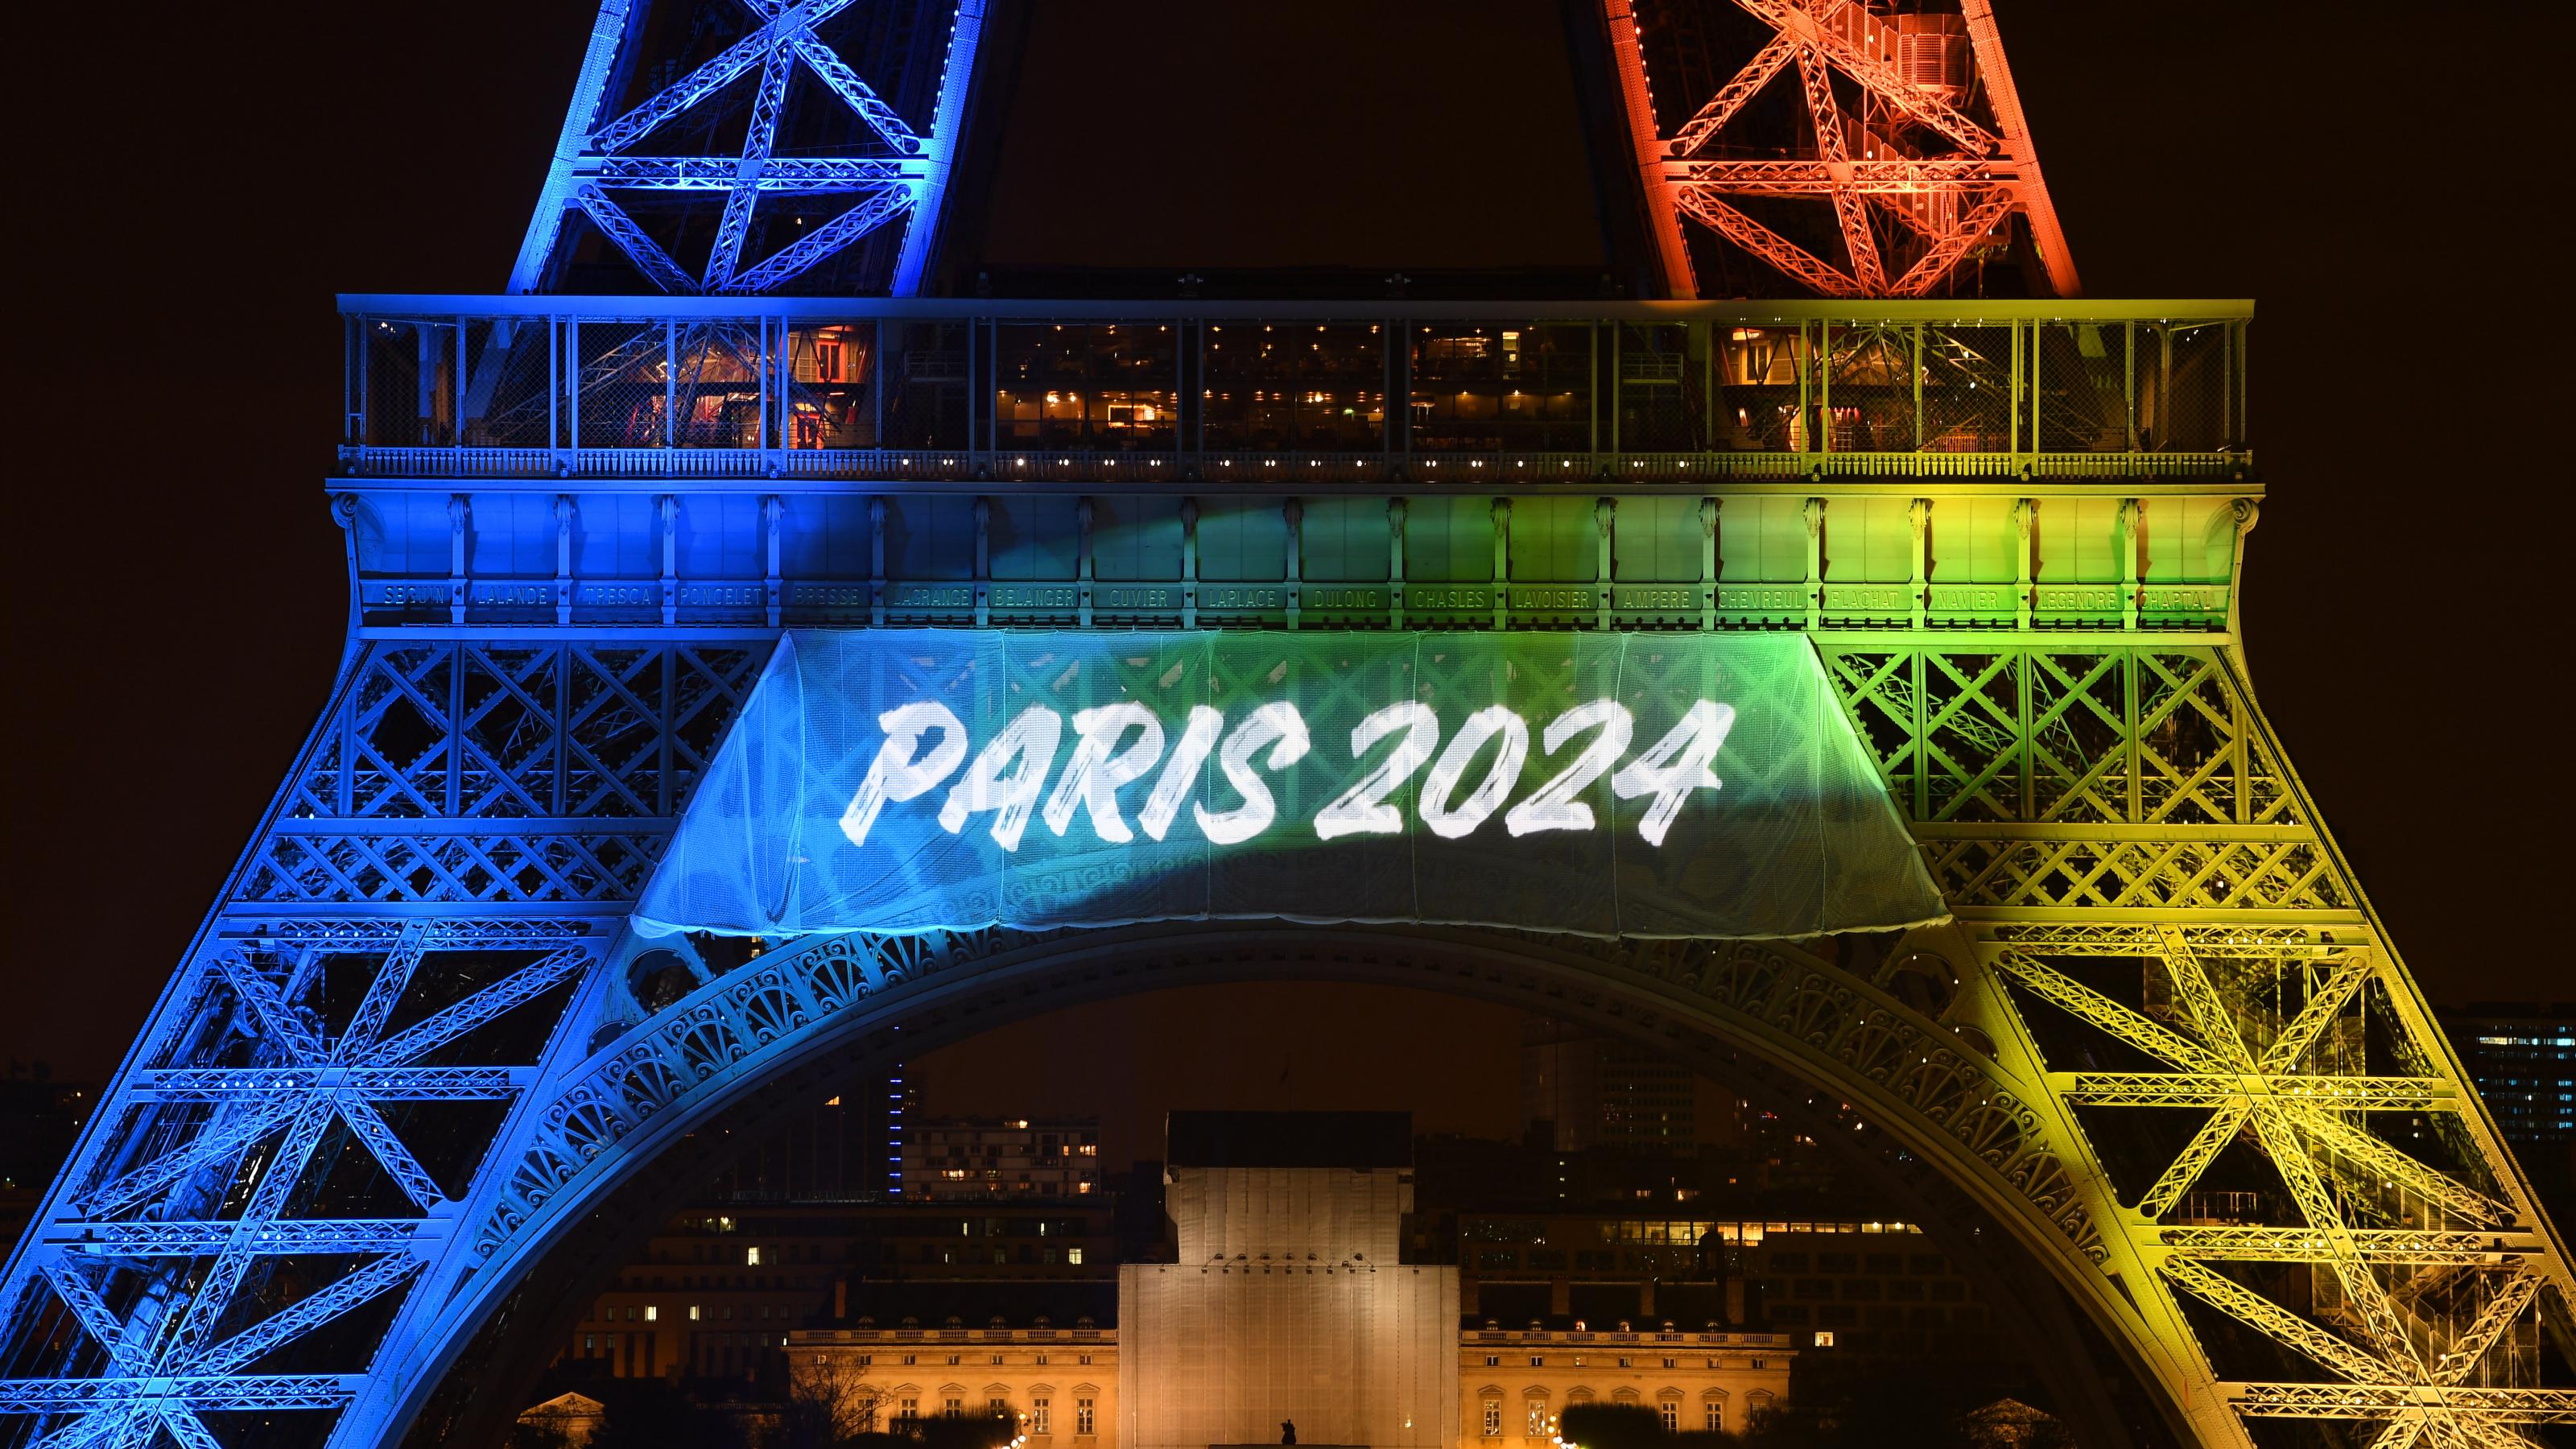 Hellerleuchteter Eiffelturm mit der Beschriftung „Paris 2024“